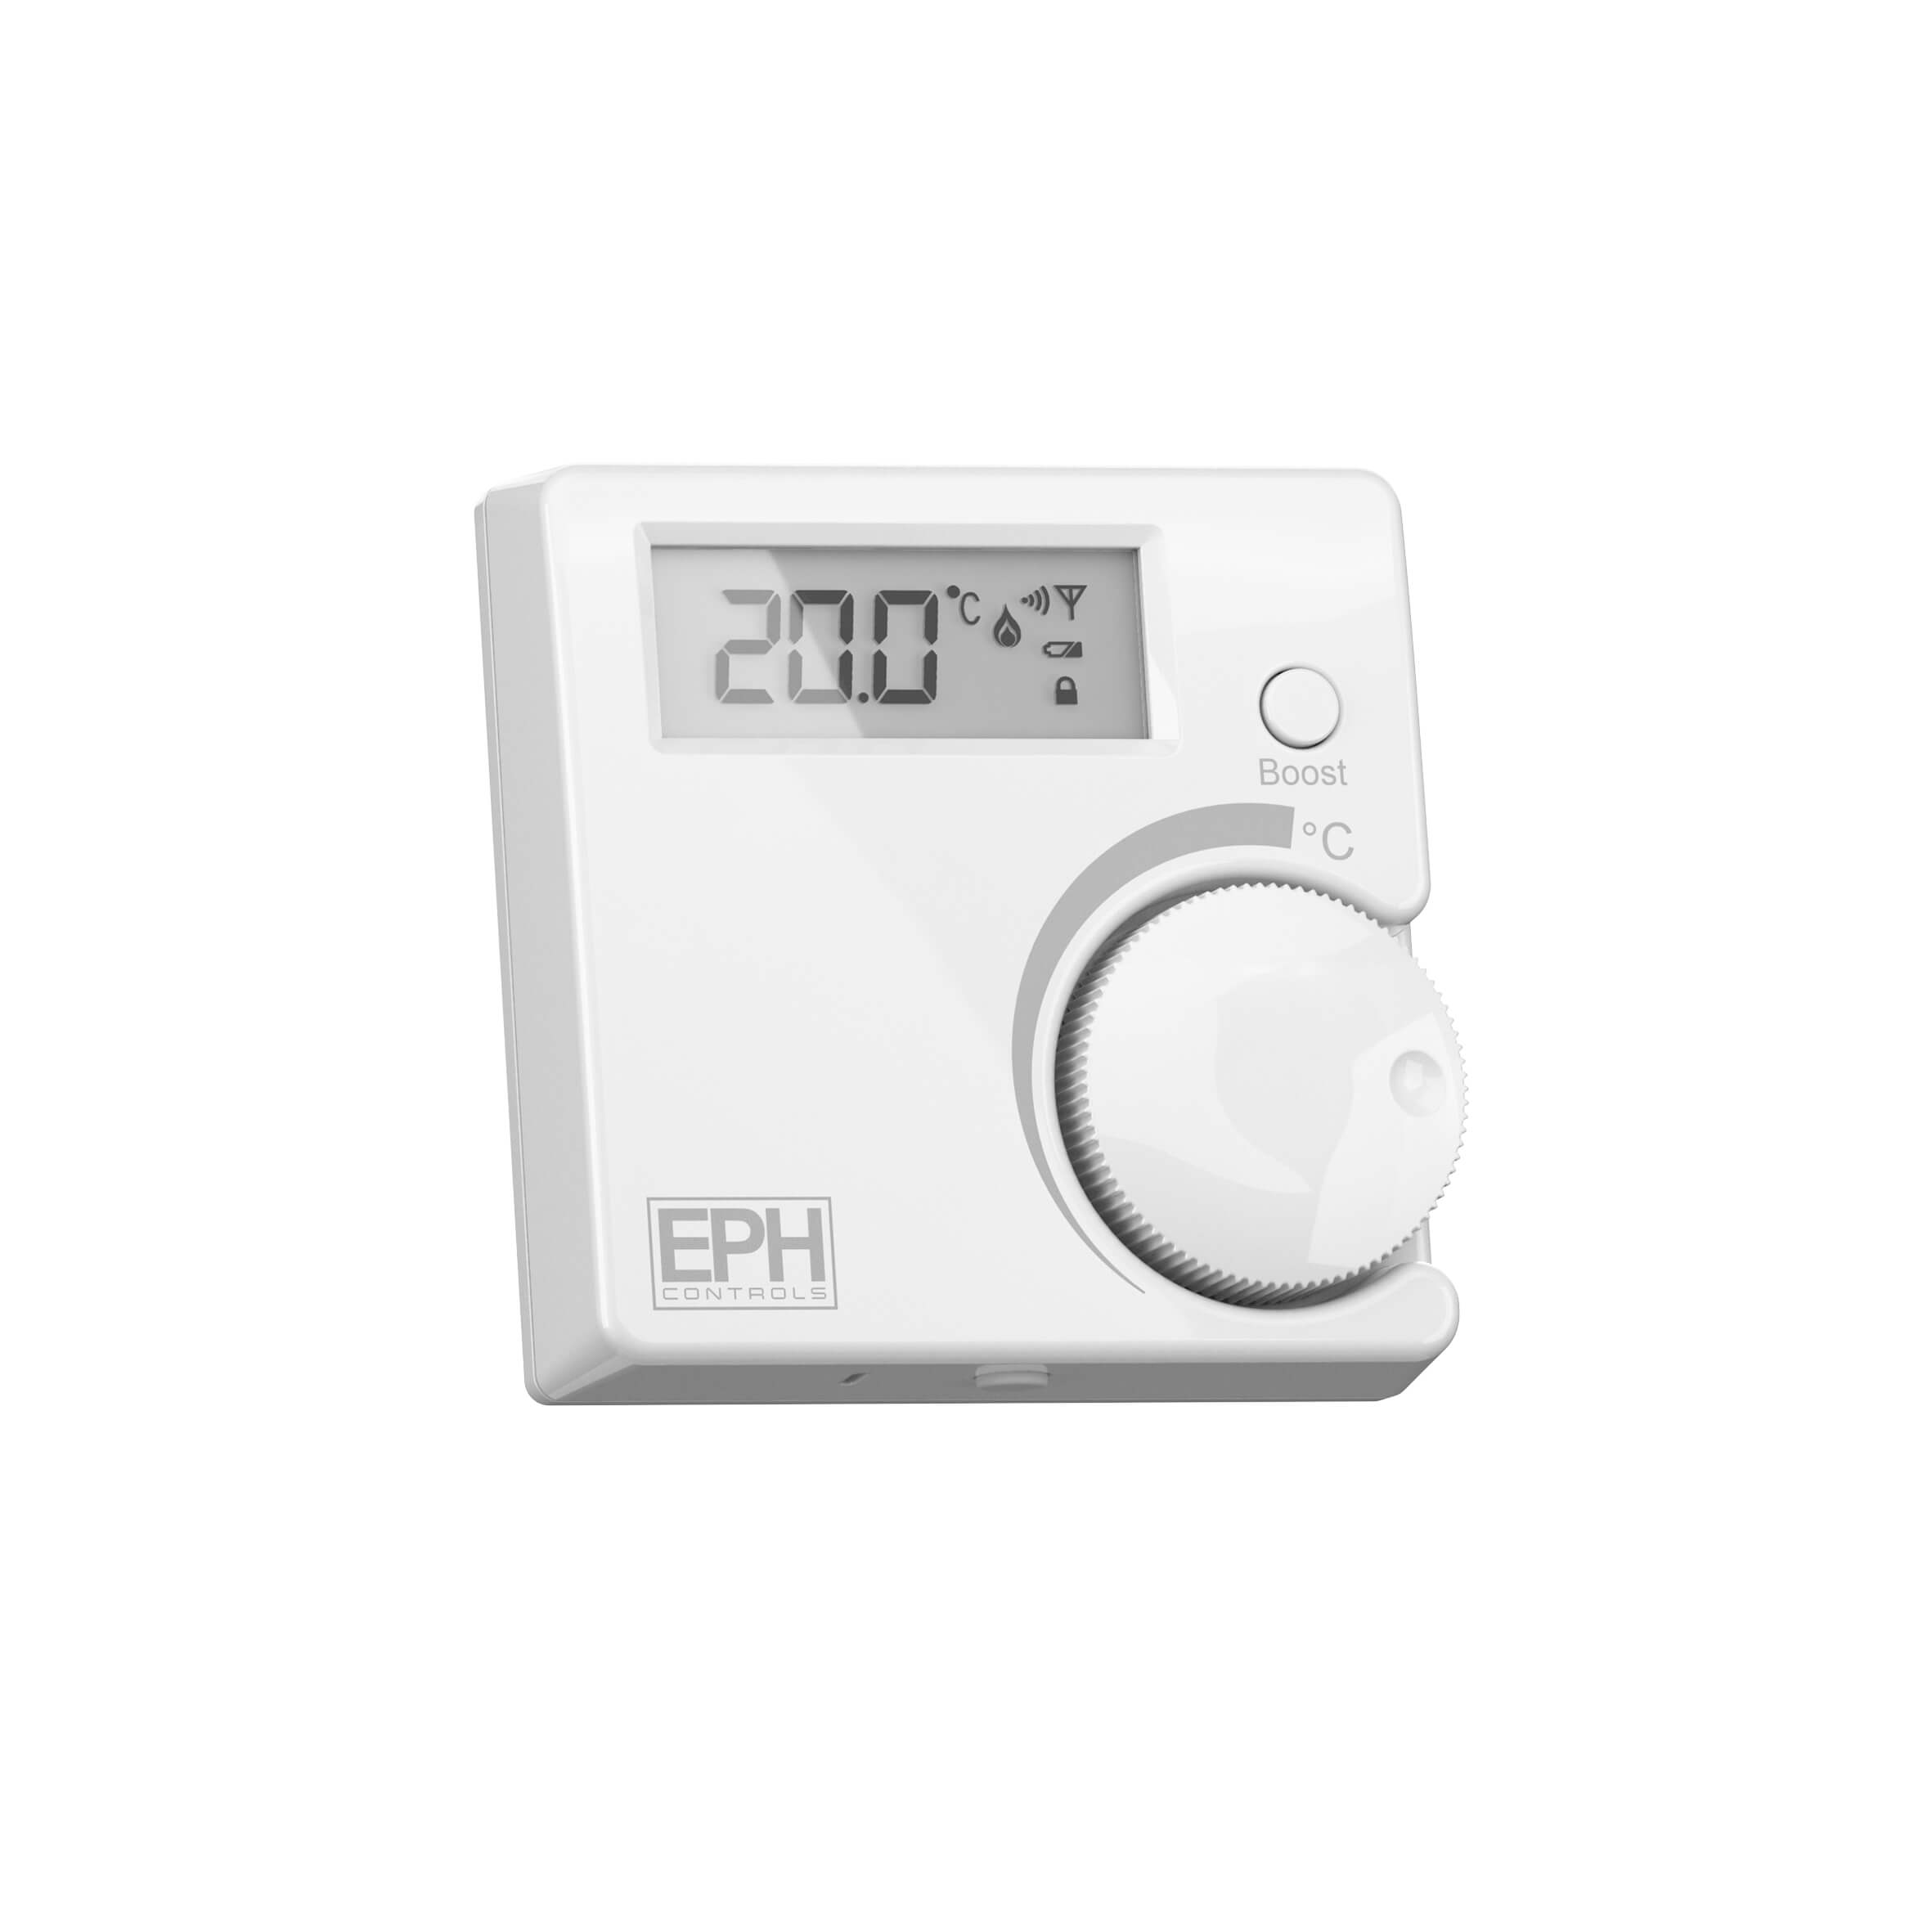 EPH RF Room Thermostat (w/ boost button) RFR